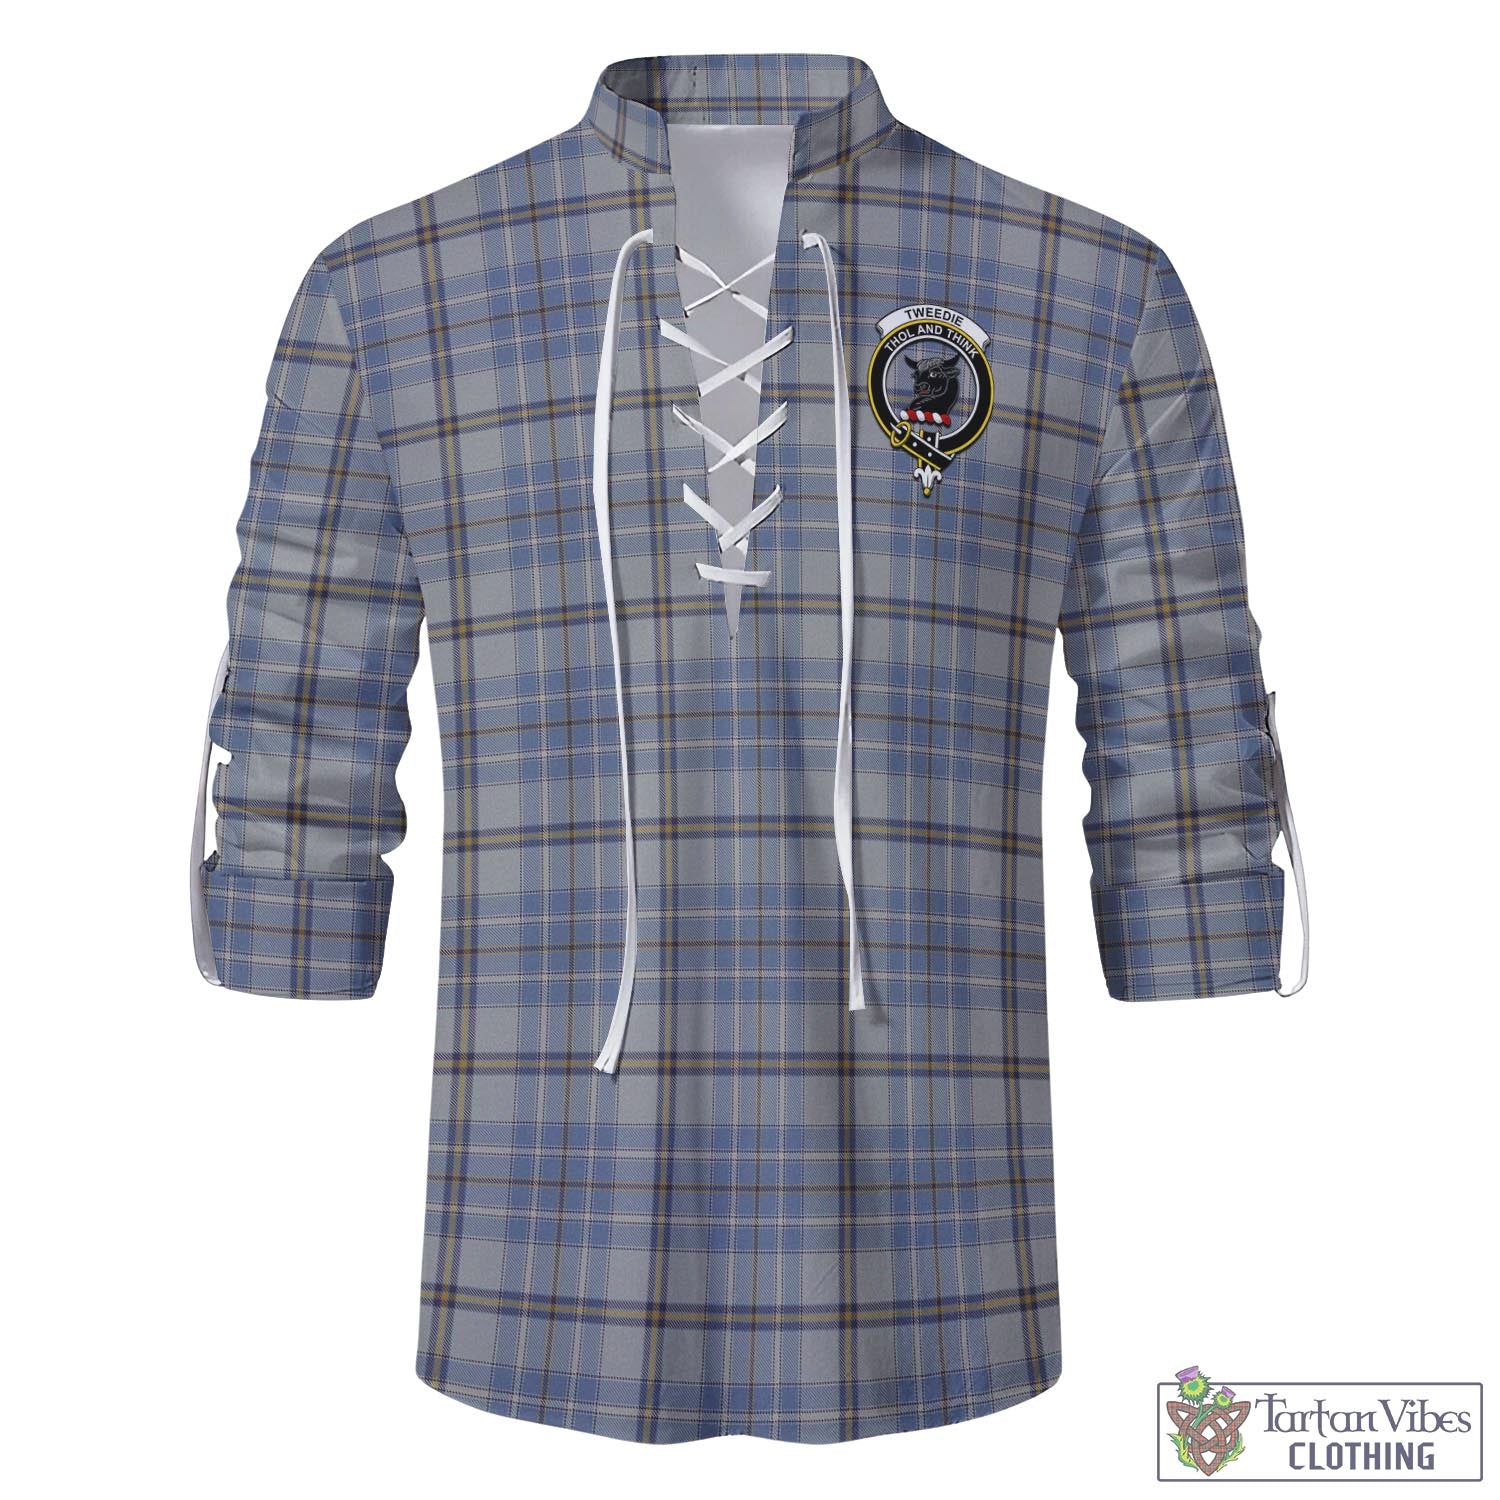 Tartan Vibes Clothing Tweedie Tartan Men's Scottish Traditional Jacobite Ghillie Kilt Shirt with Family Crest